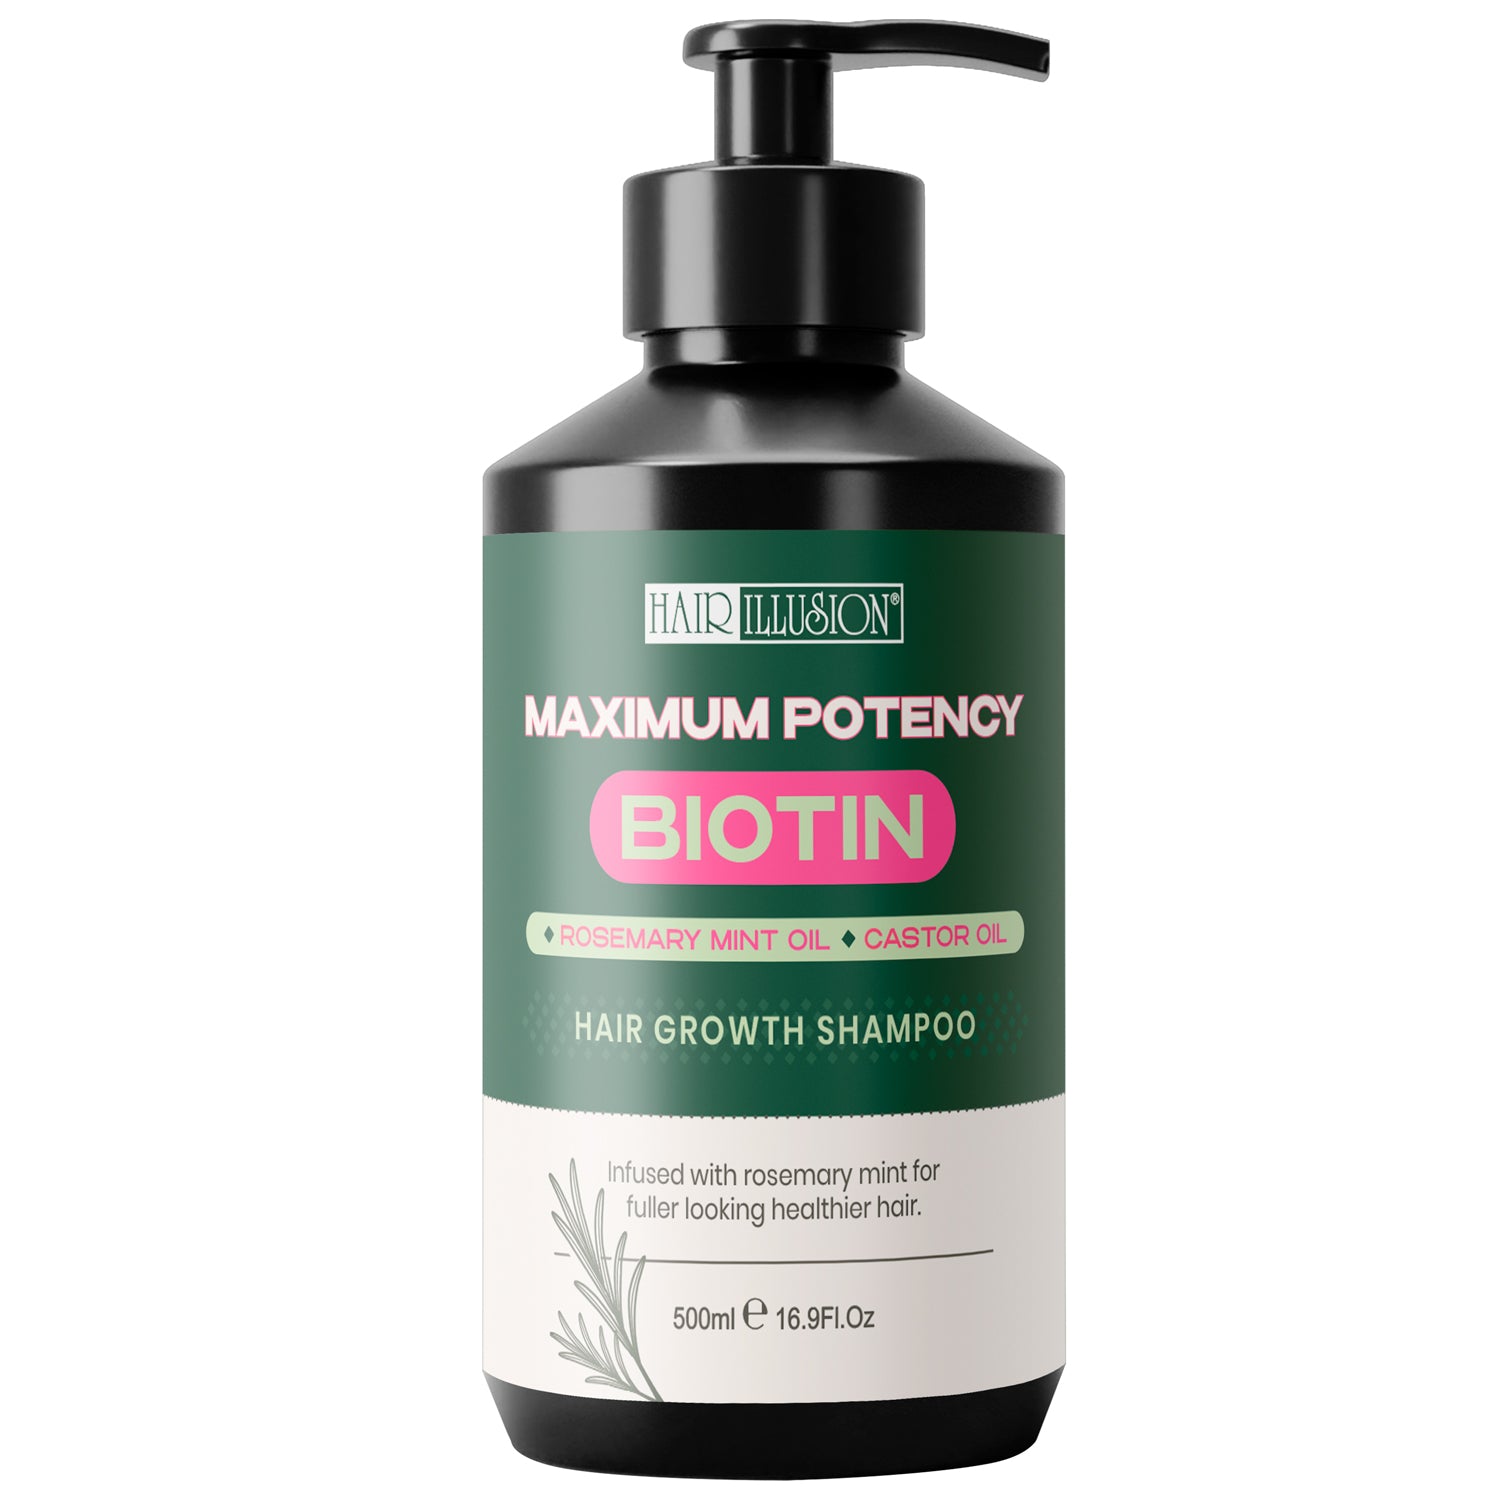 Hair Illusion Hair Growth Shampoo with Maximum Potency Biotin, Rosemary & Castor Oil